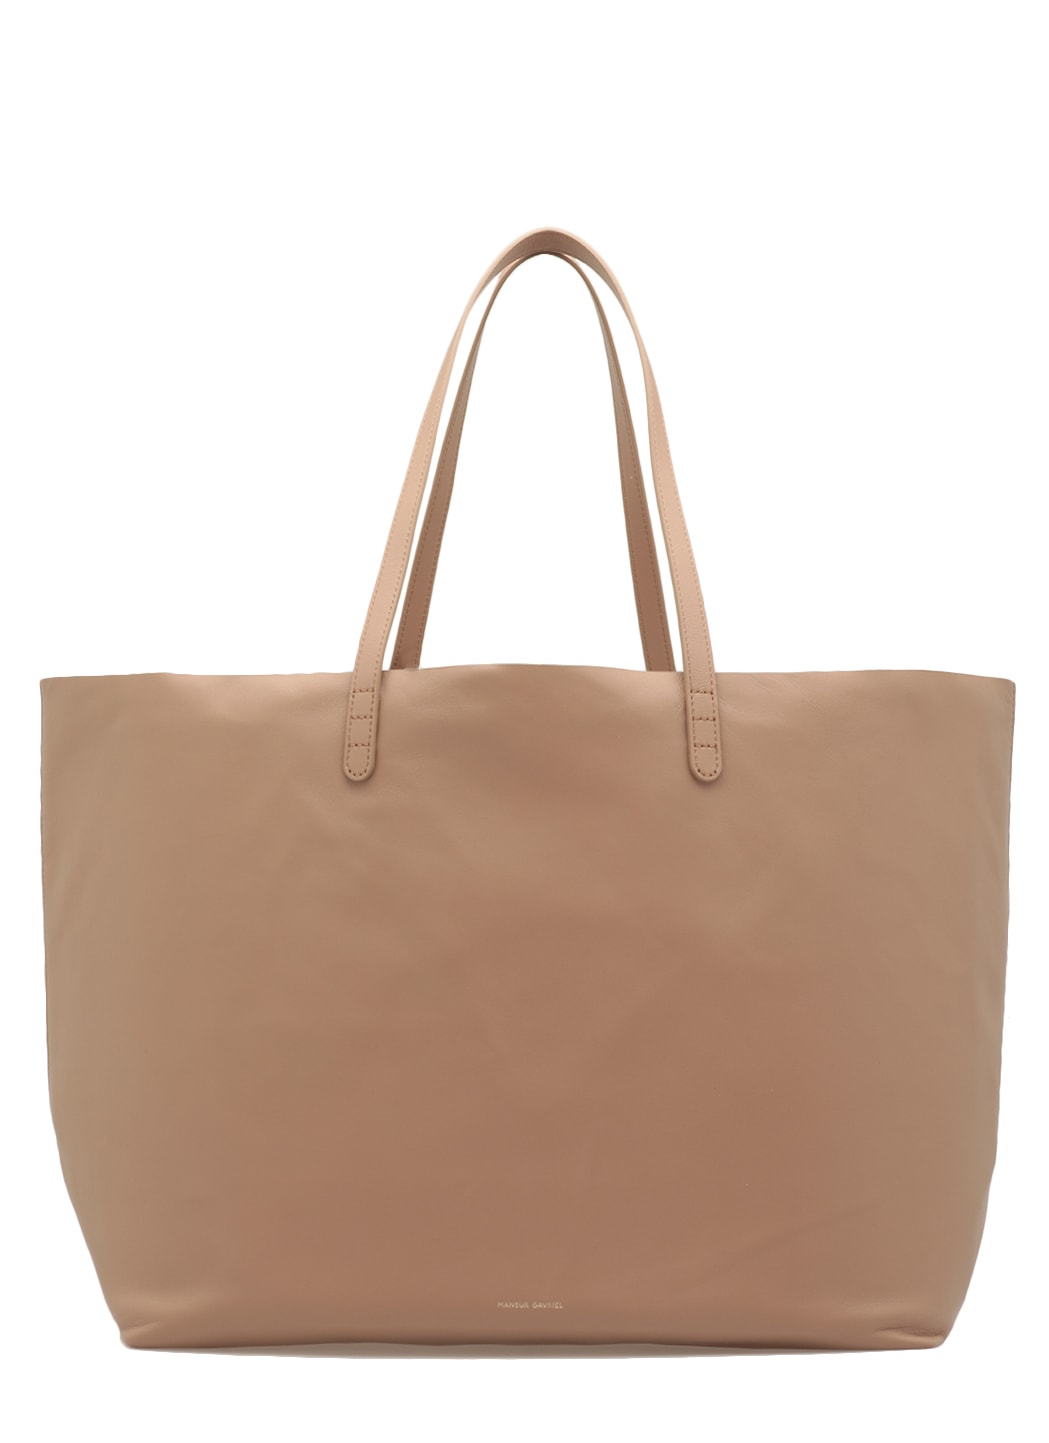 Mansur Gavriel Leather Shopping Bag In Biscotto